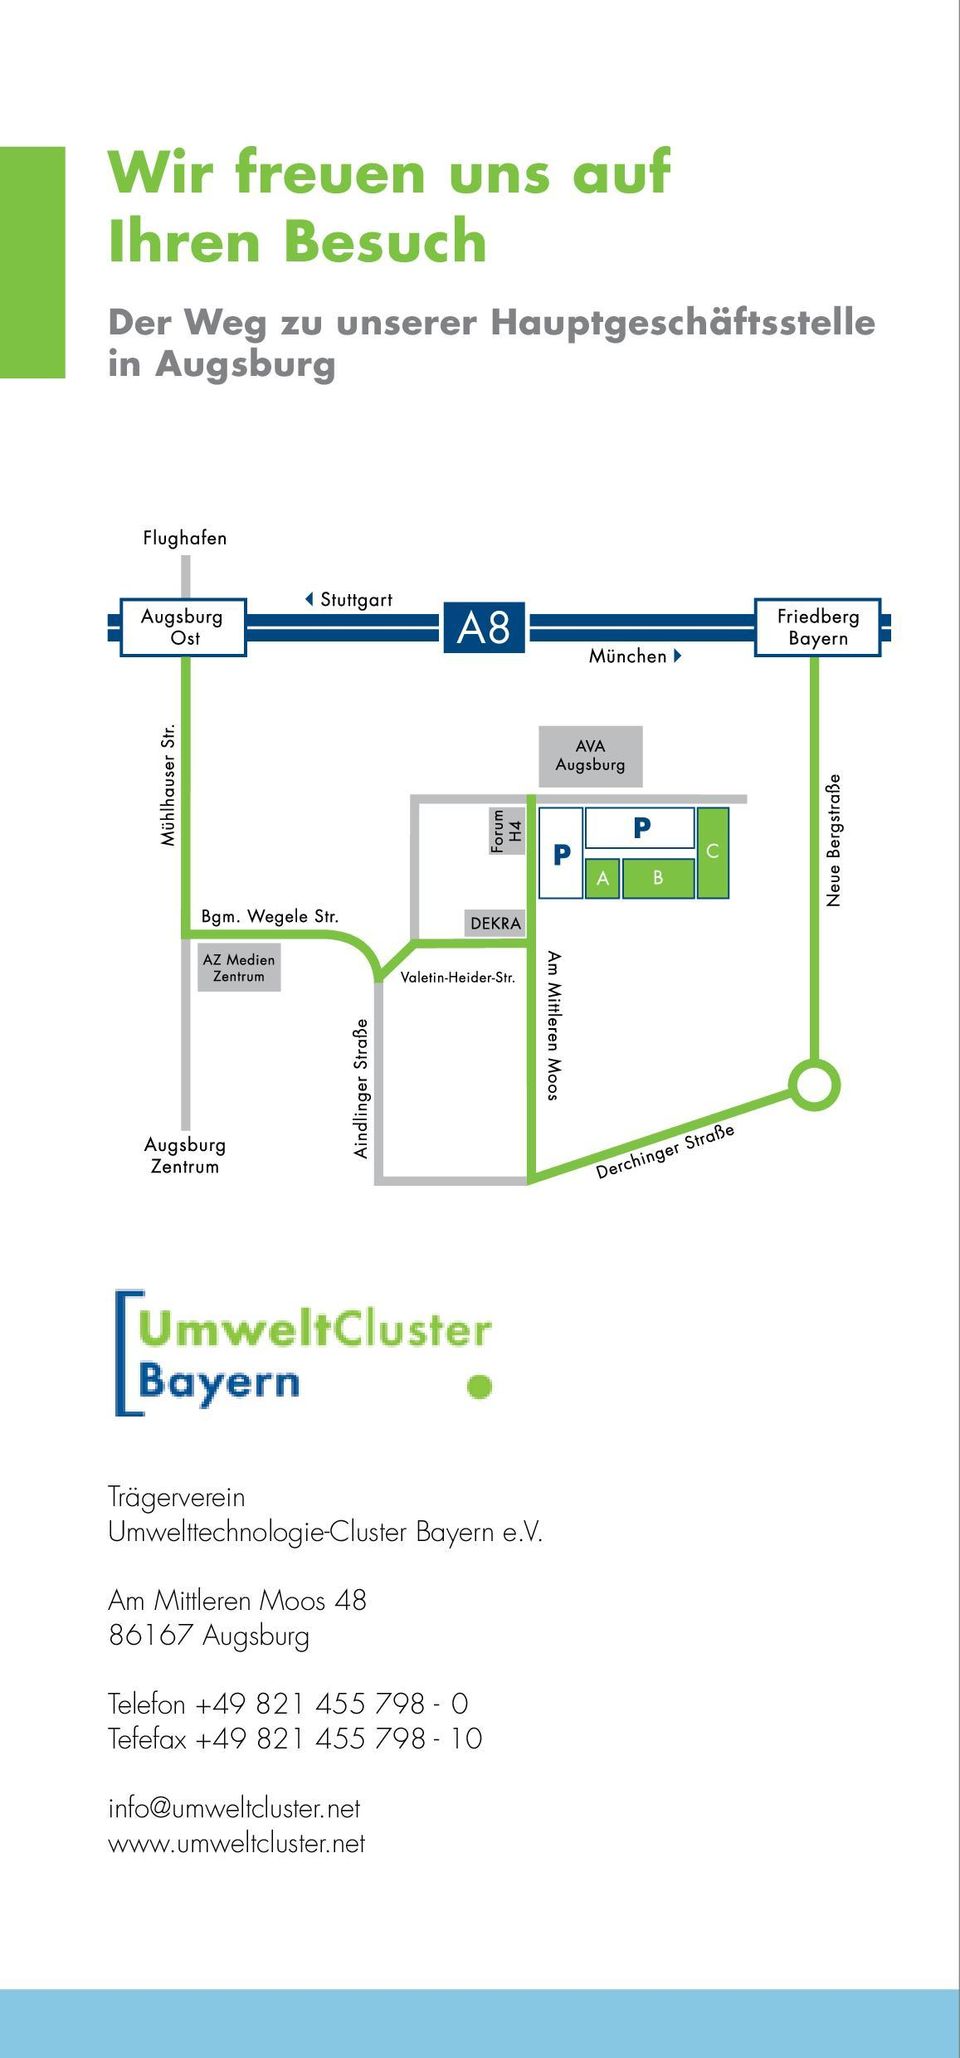 Umwelttechnologie-Cluster Bayern e.v.